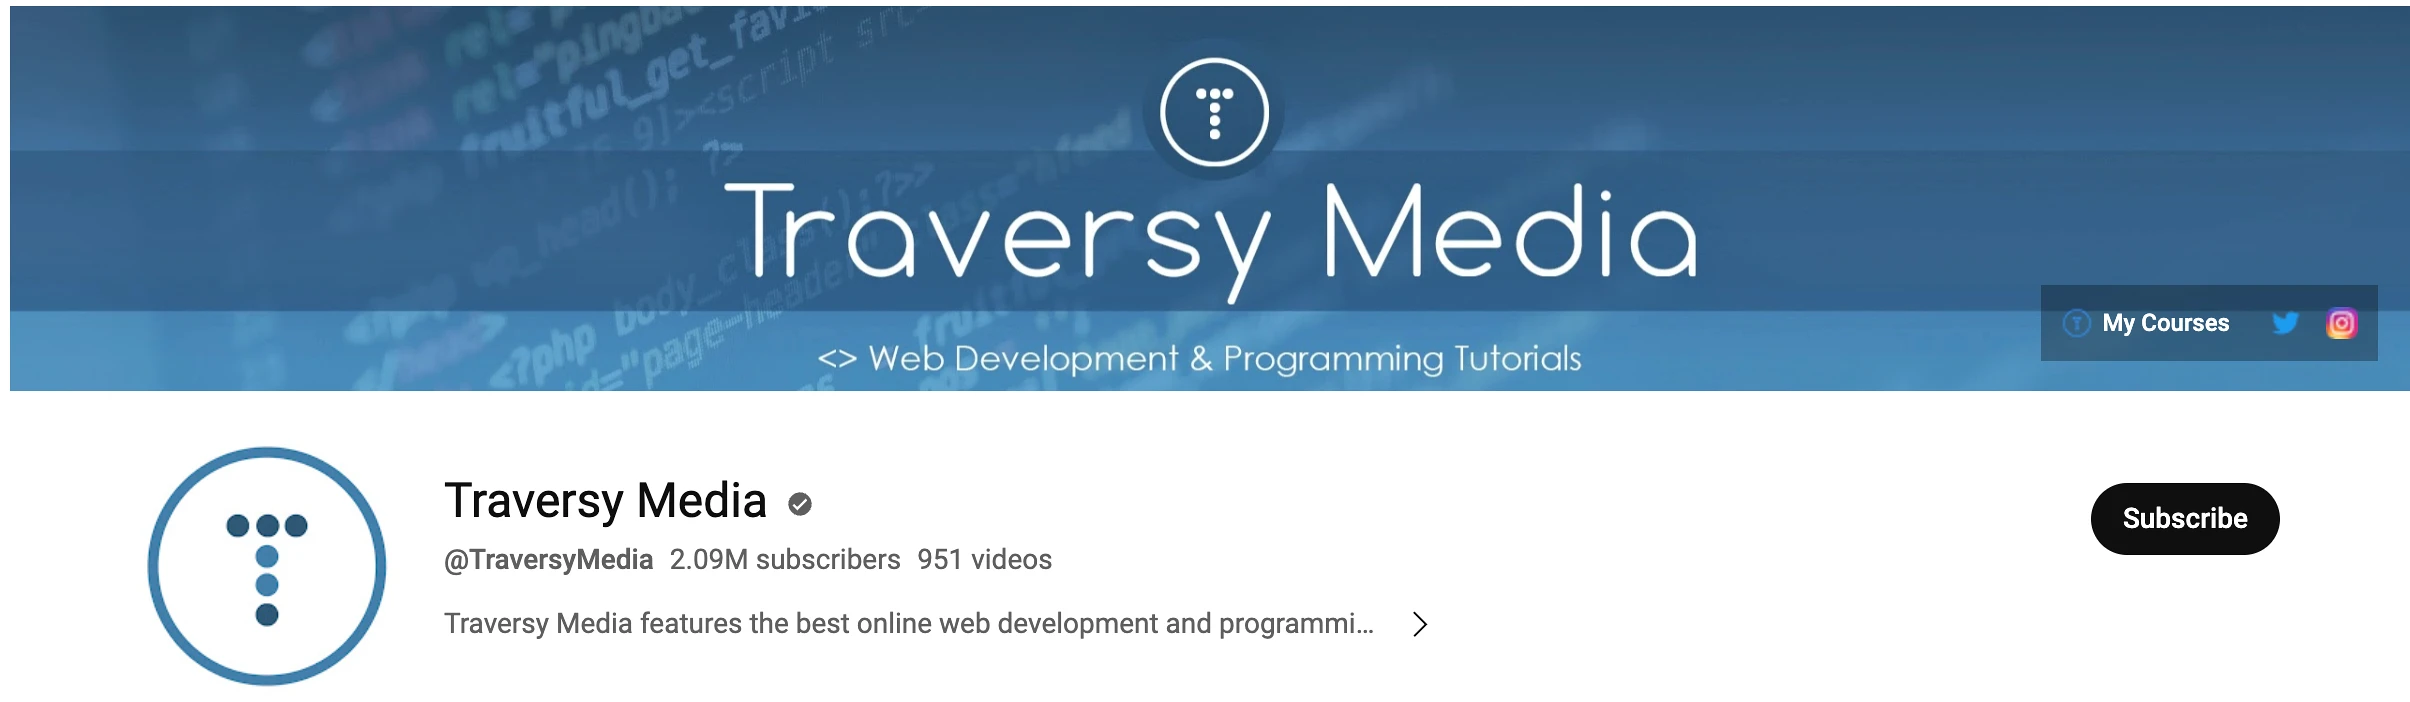 Traversy Media: List of Best Web Design and Web Development Youtube Channels